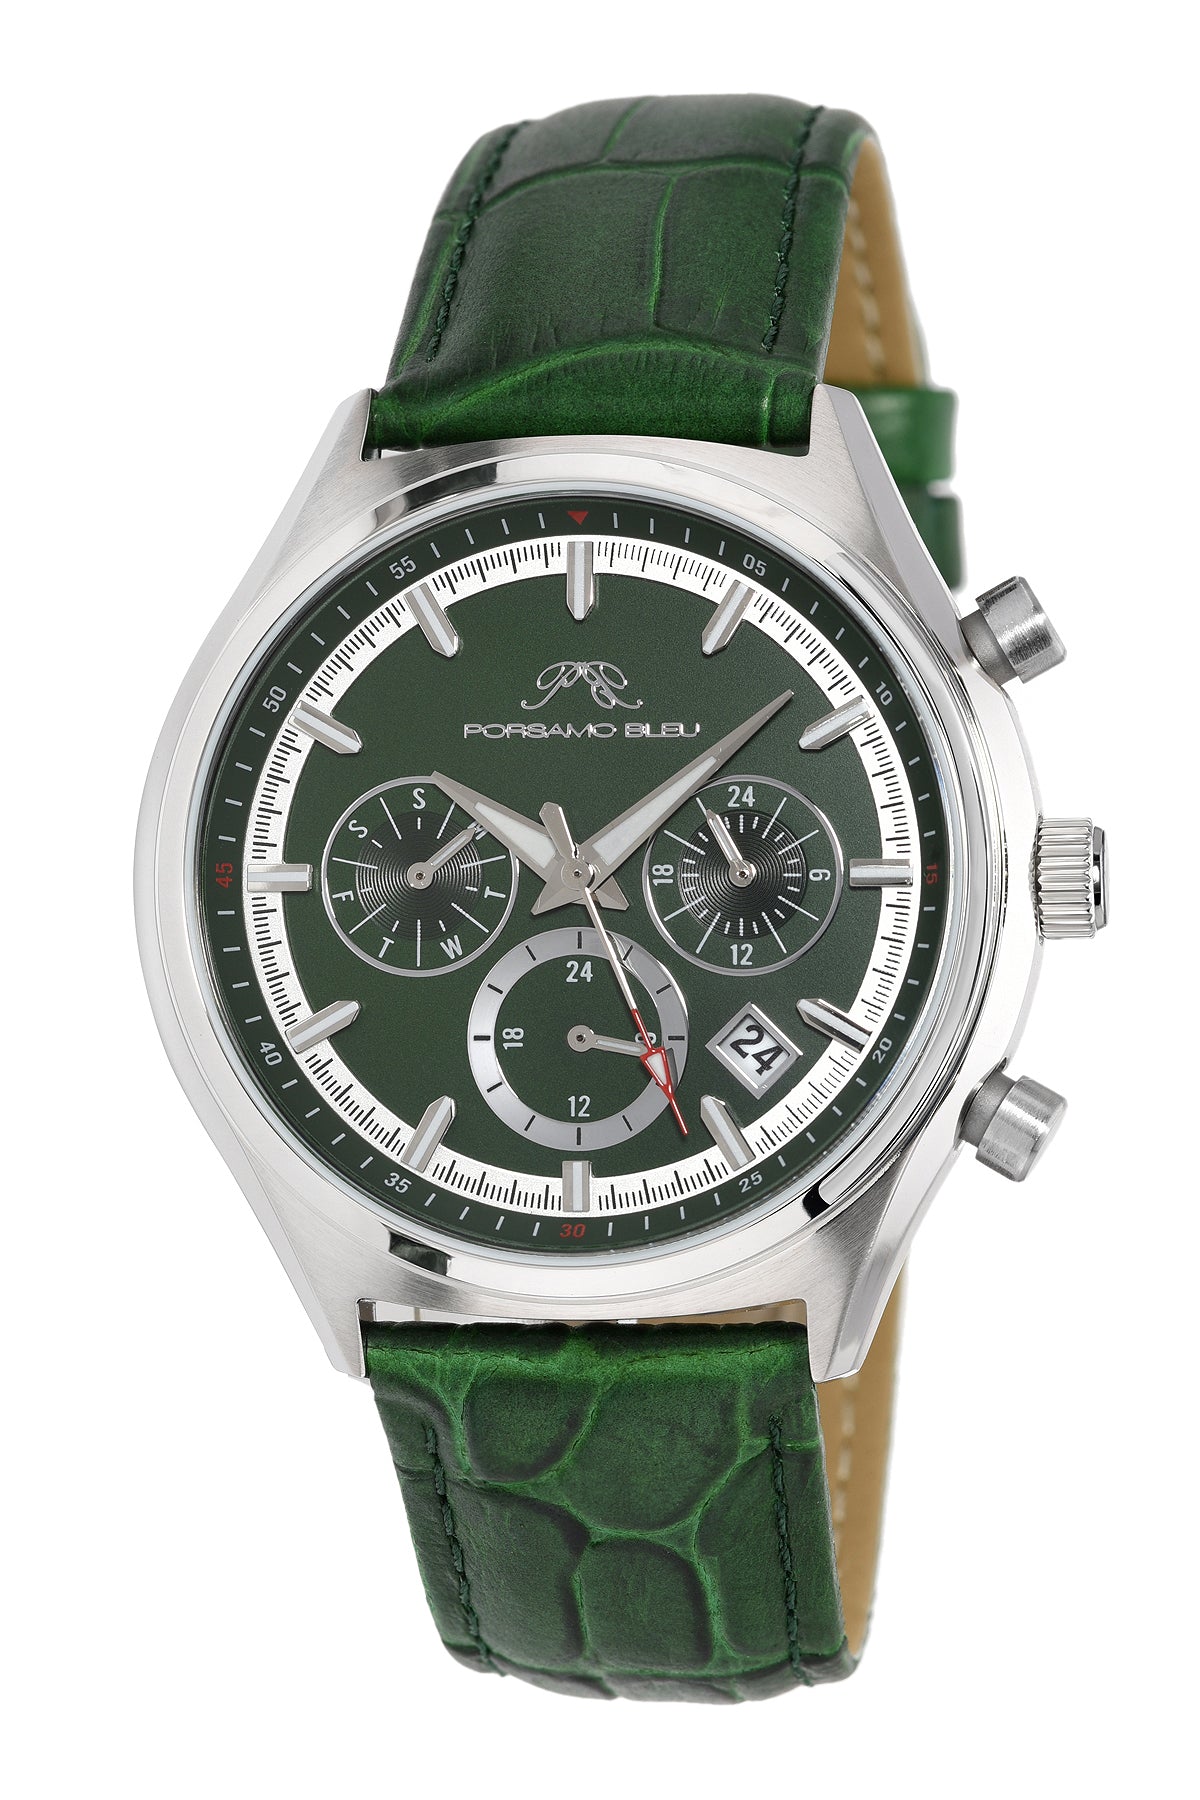 Porsamo Bleu Dylan Luxury Men's Watch, Genuine Leather Band, Green 871DDYL